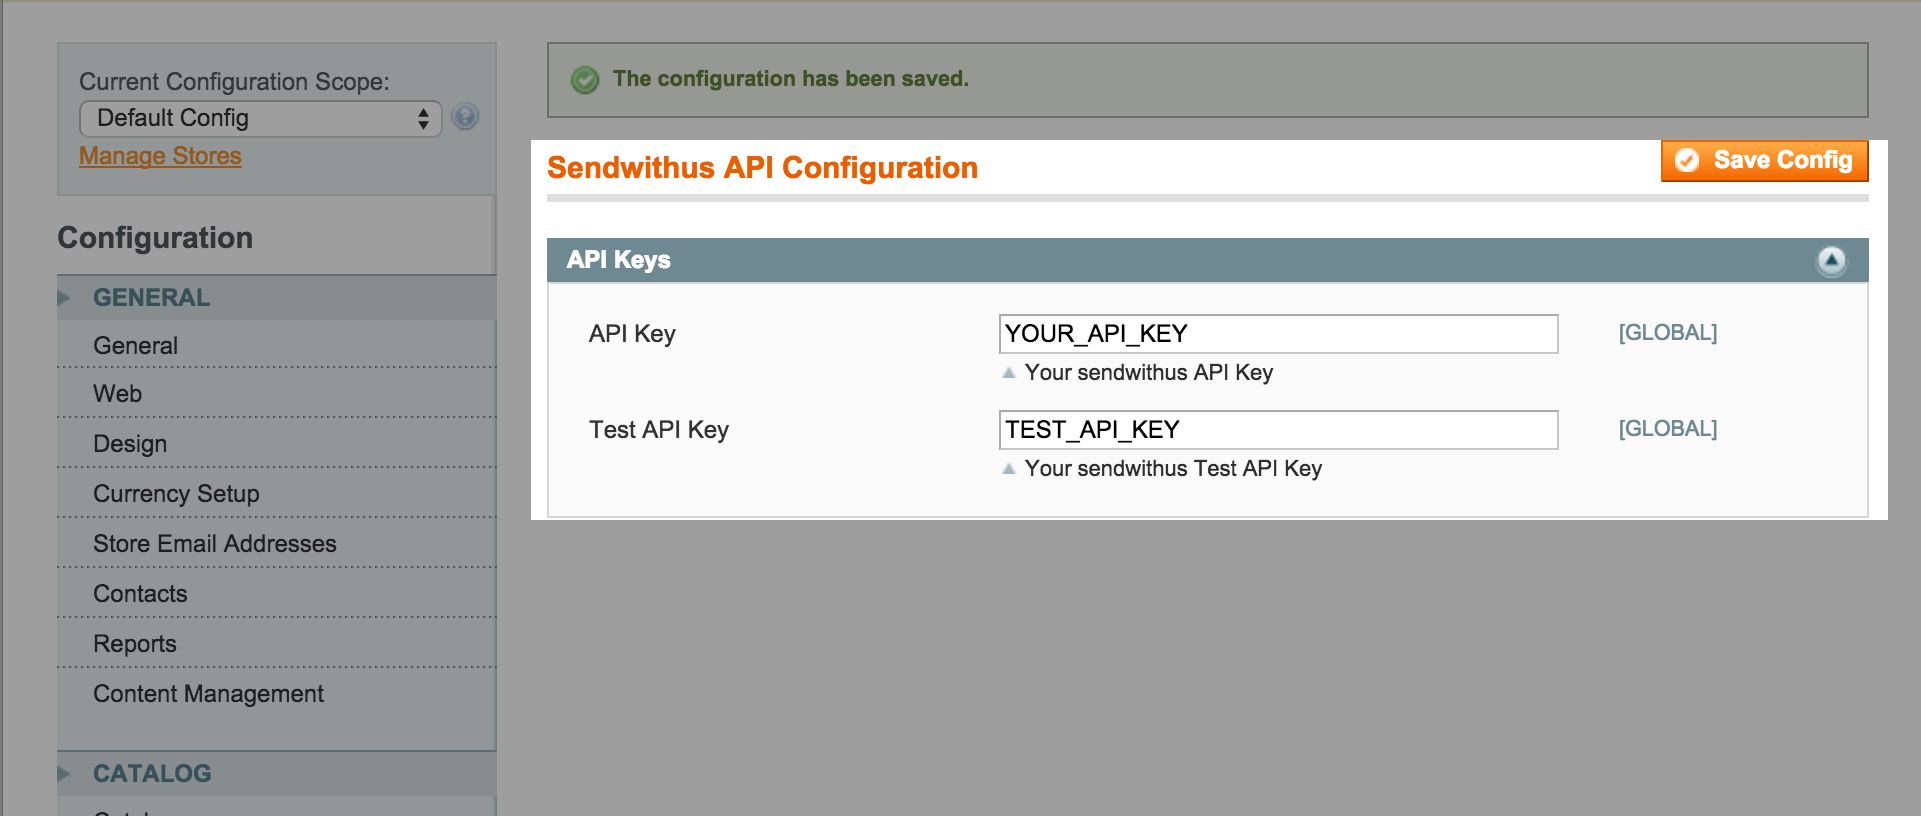 API Configuration